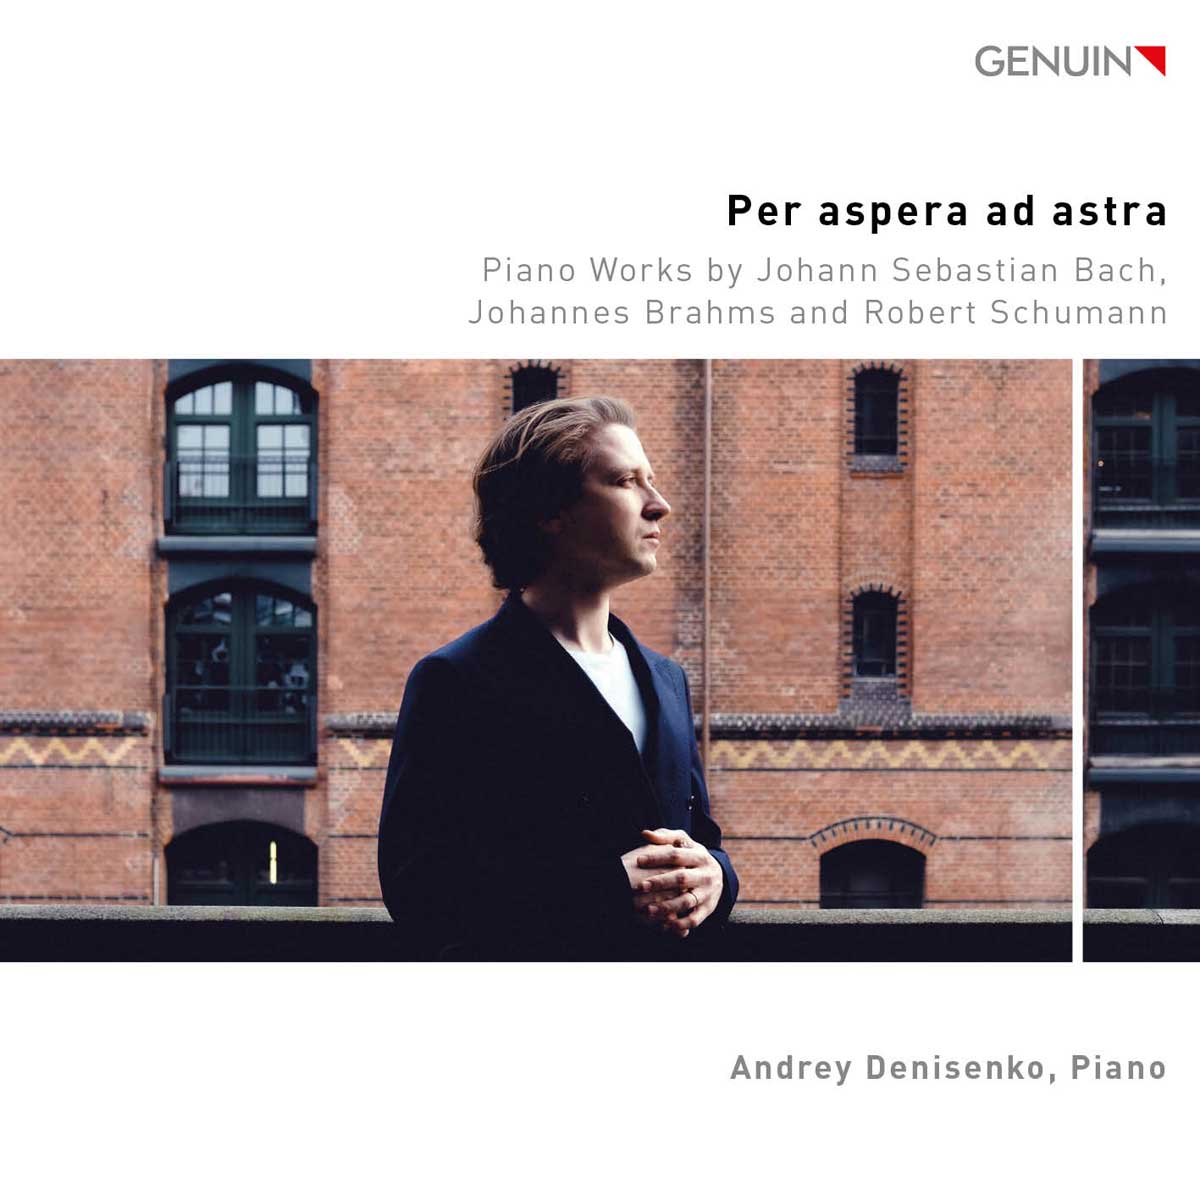 CD album cover 'Per aspera ad astra' (GEN 24852) with Andrey  Denisenko